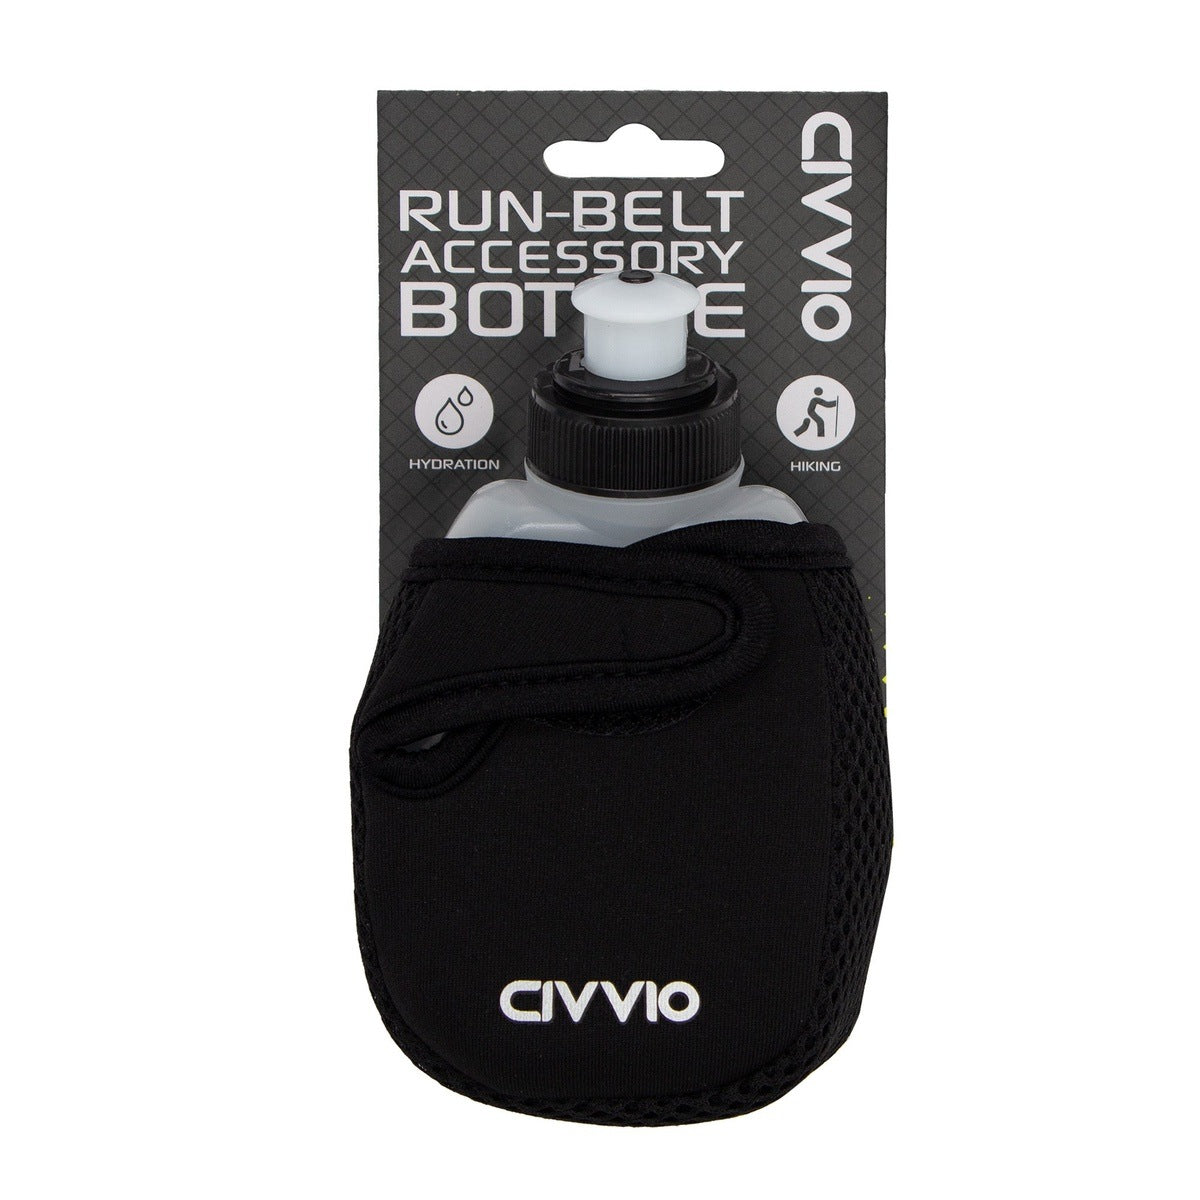 Civvio Run-belt Accessory Bottle 